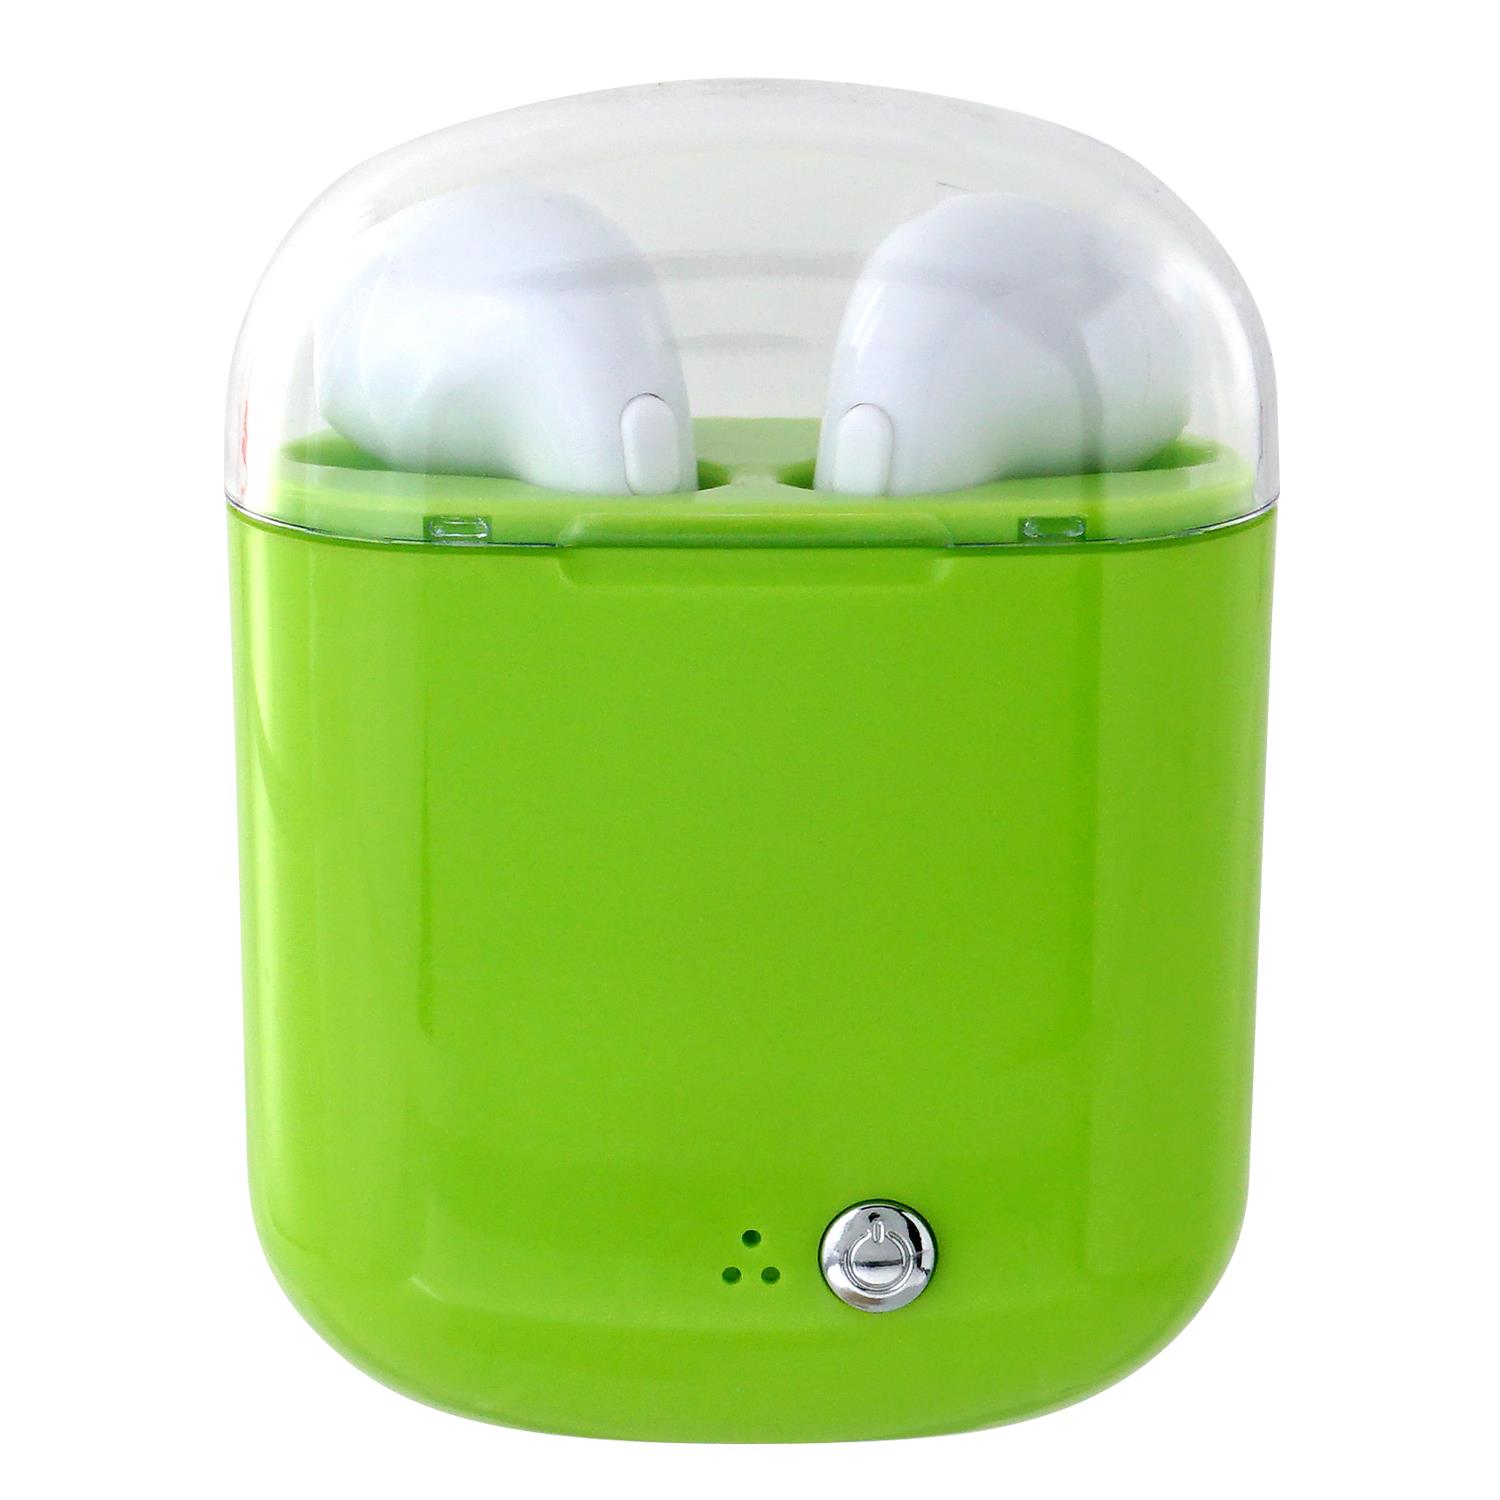 Periscope Bluetooth Ear Buds - TEC093